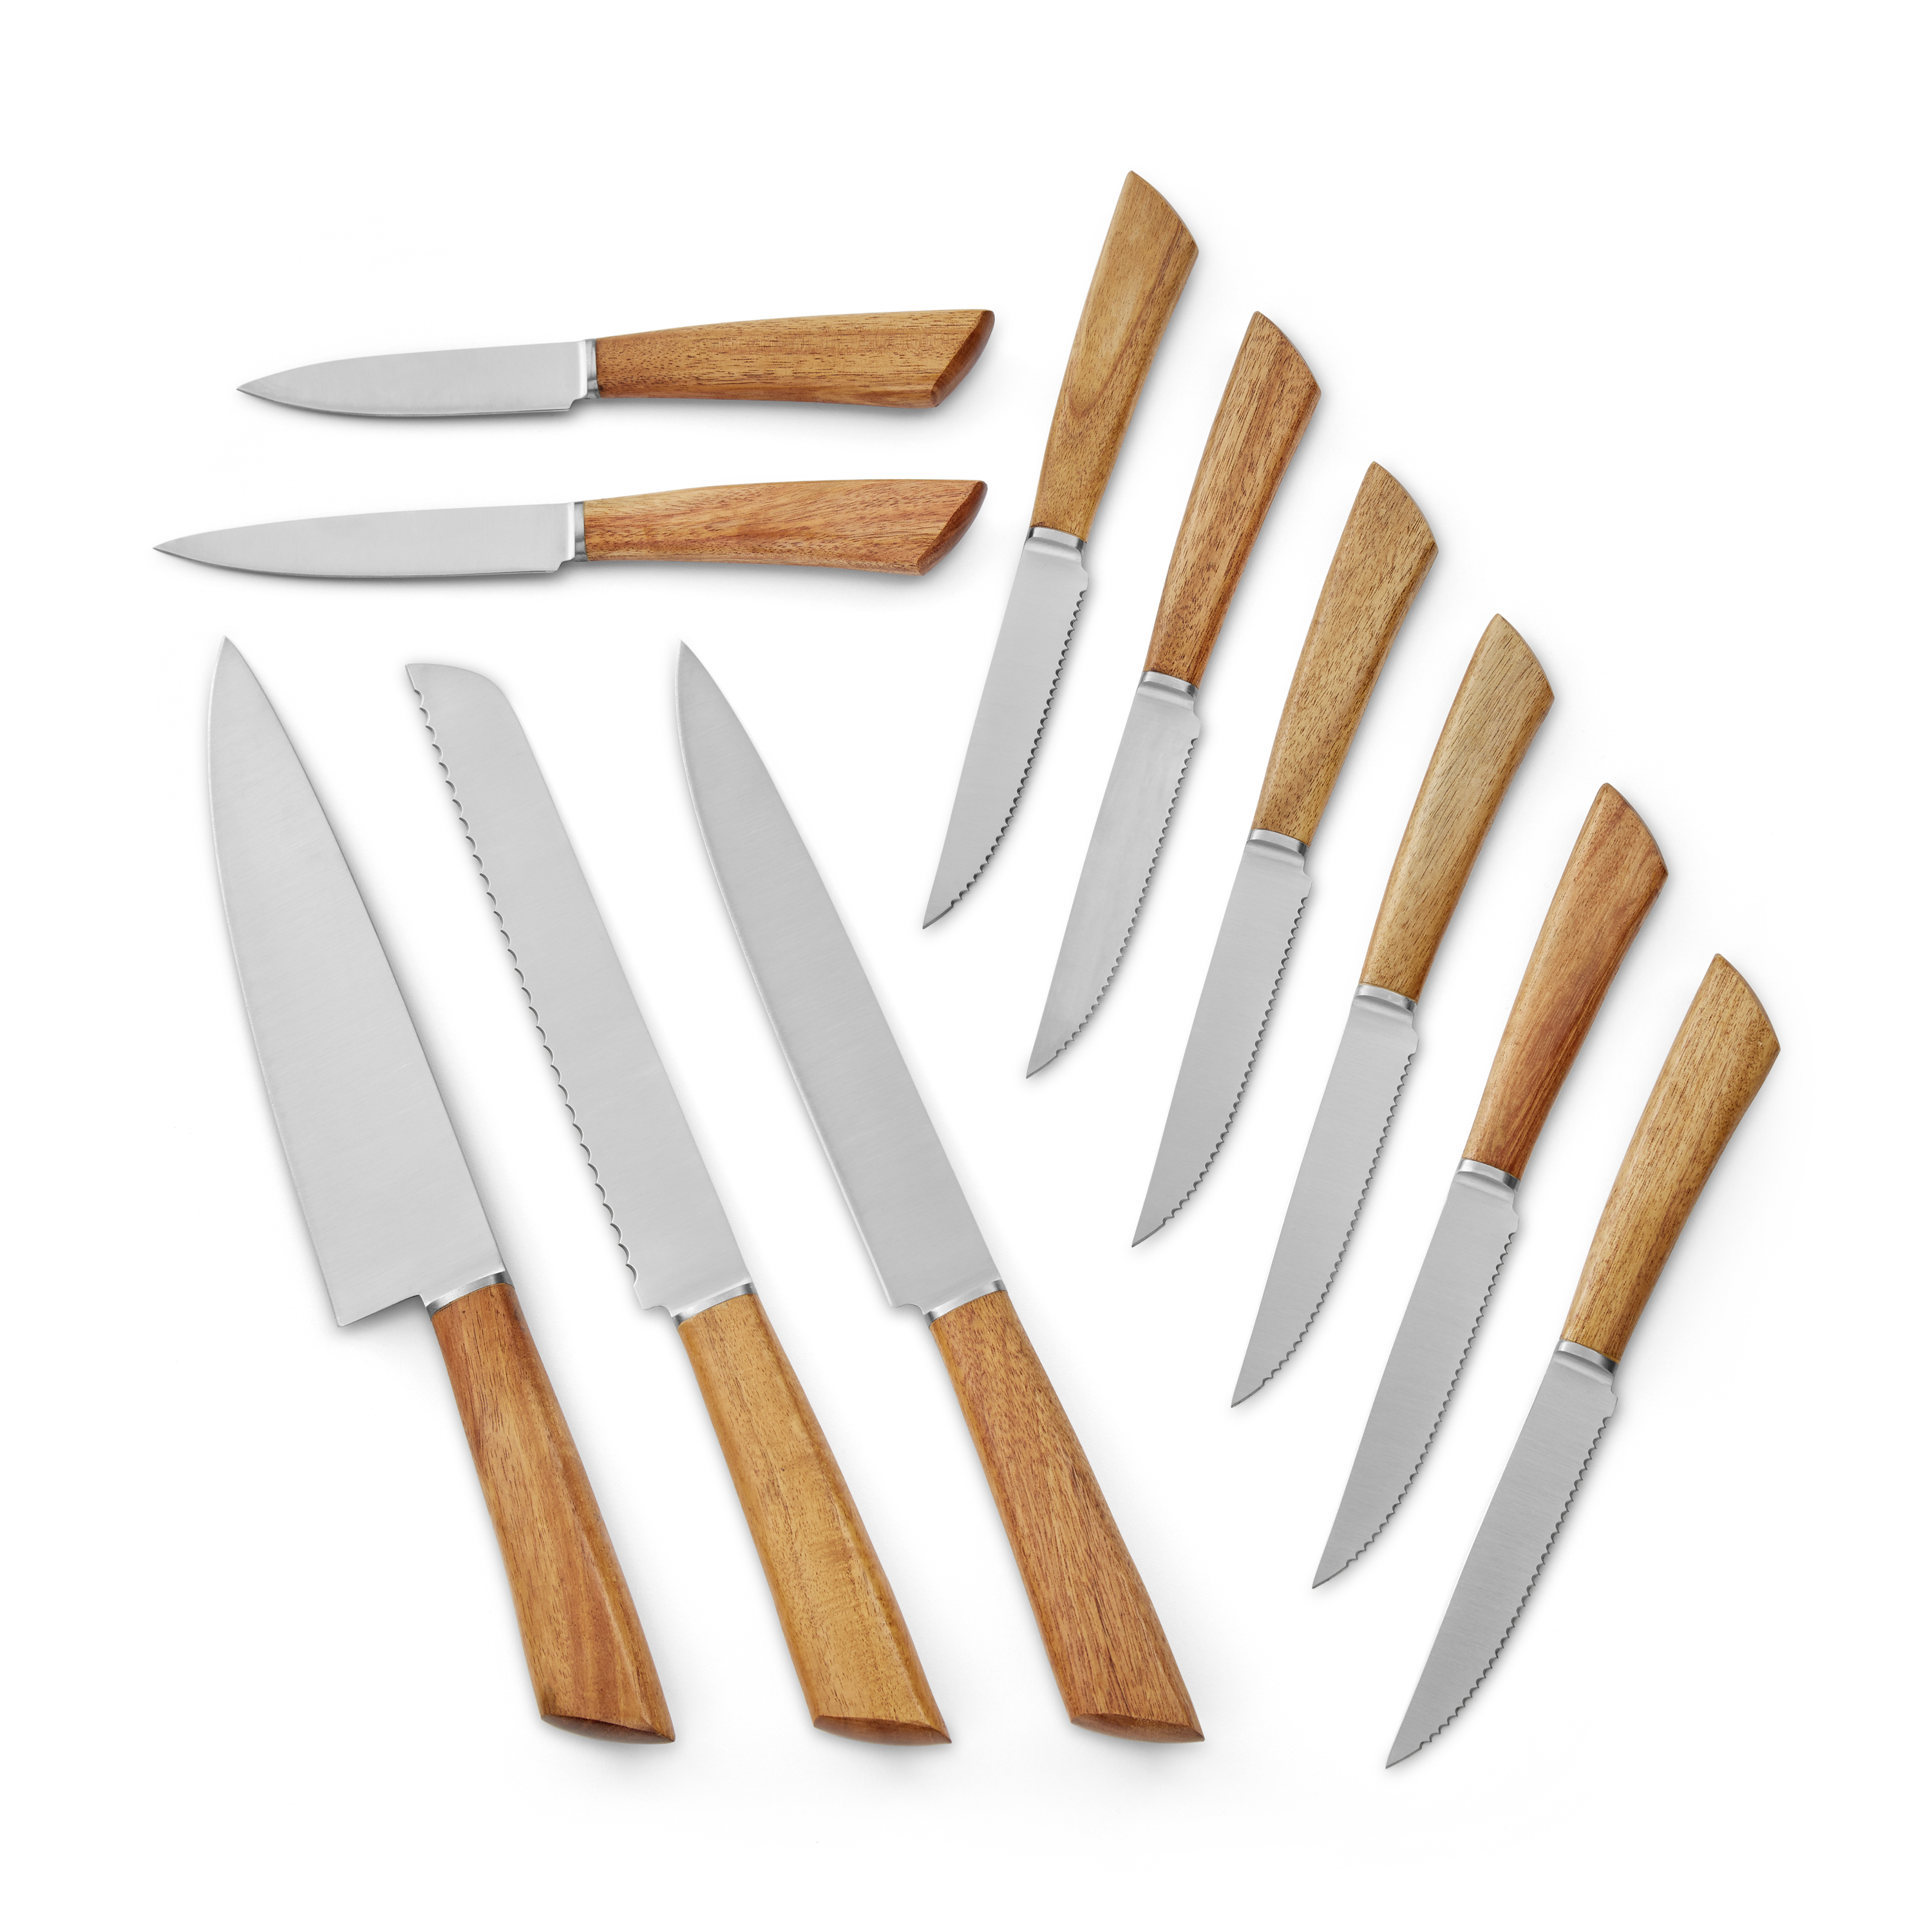 12-Piece Acacia Handle Knife Set with Acacia Wood and Acrylic Block - image 2 of 4